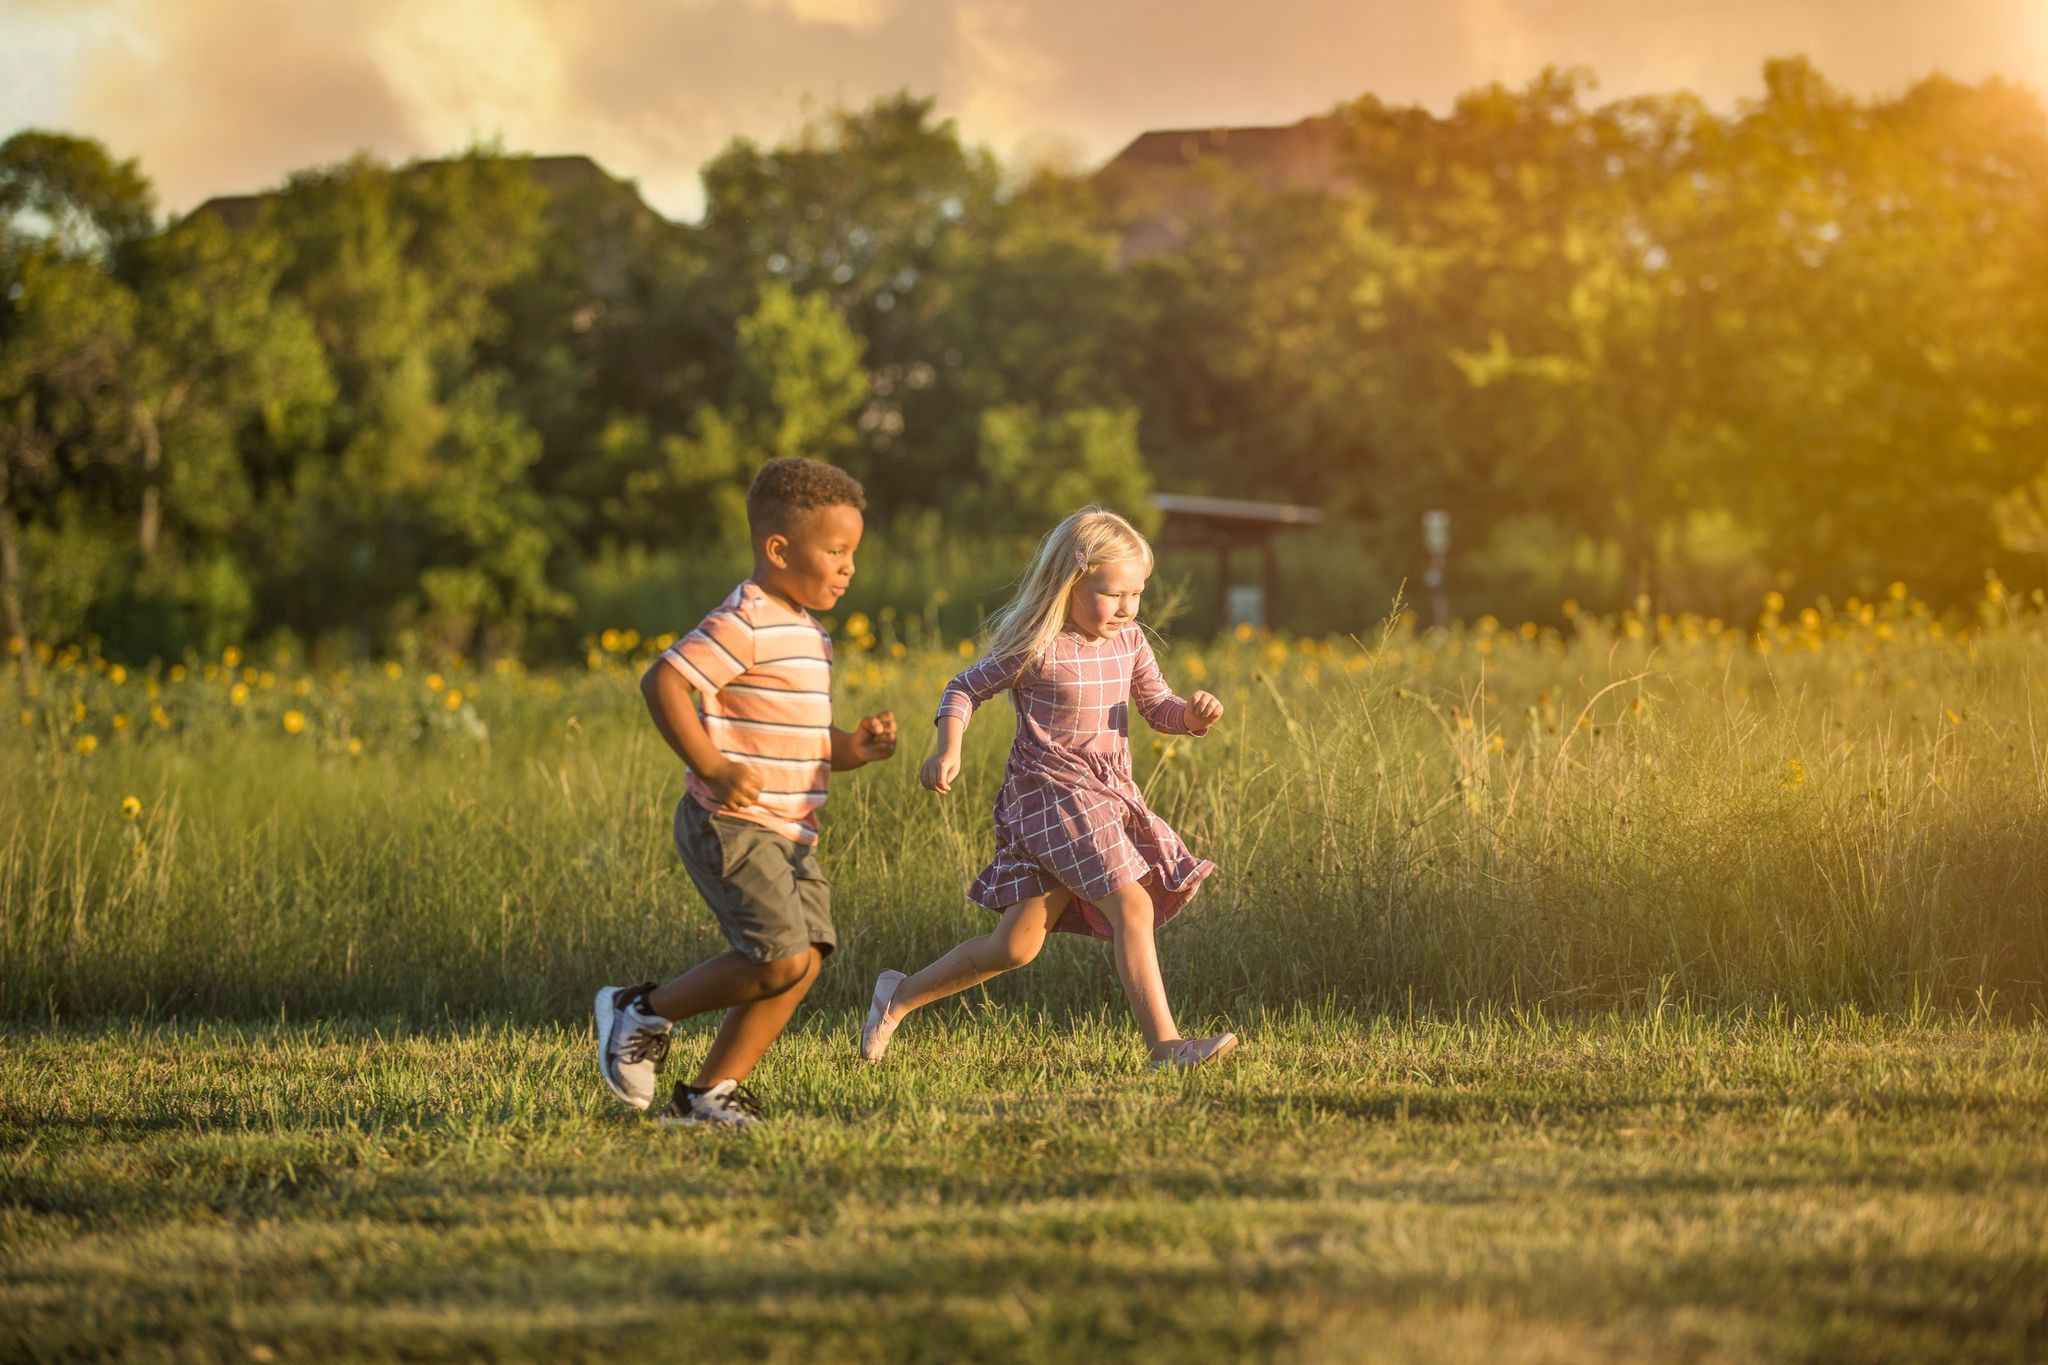 Two small children run through a field.